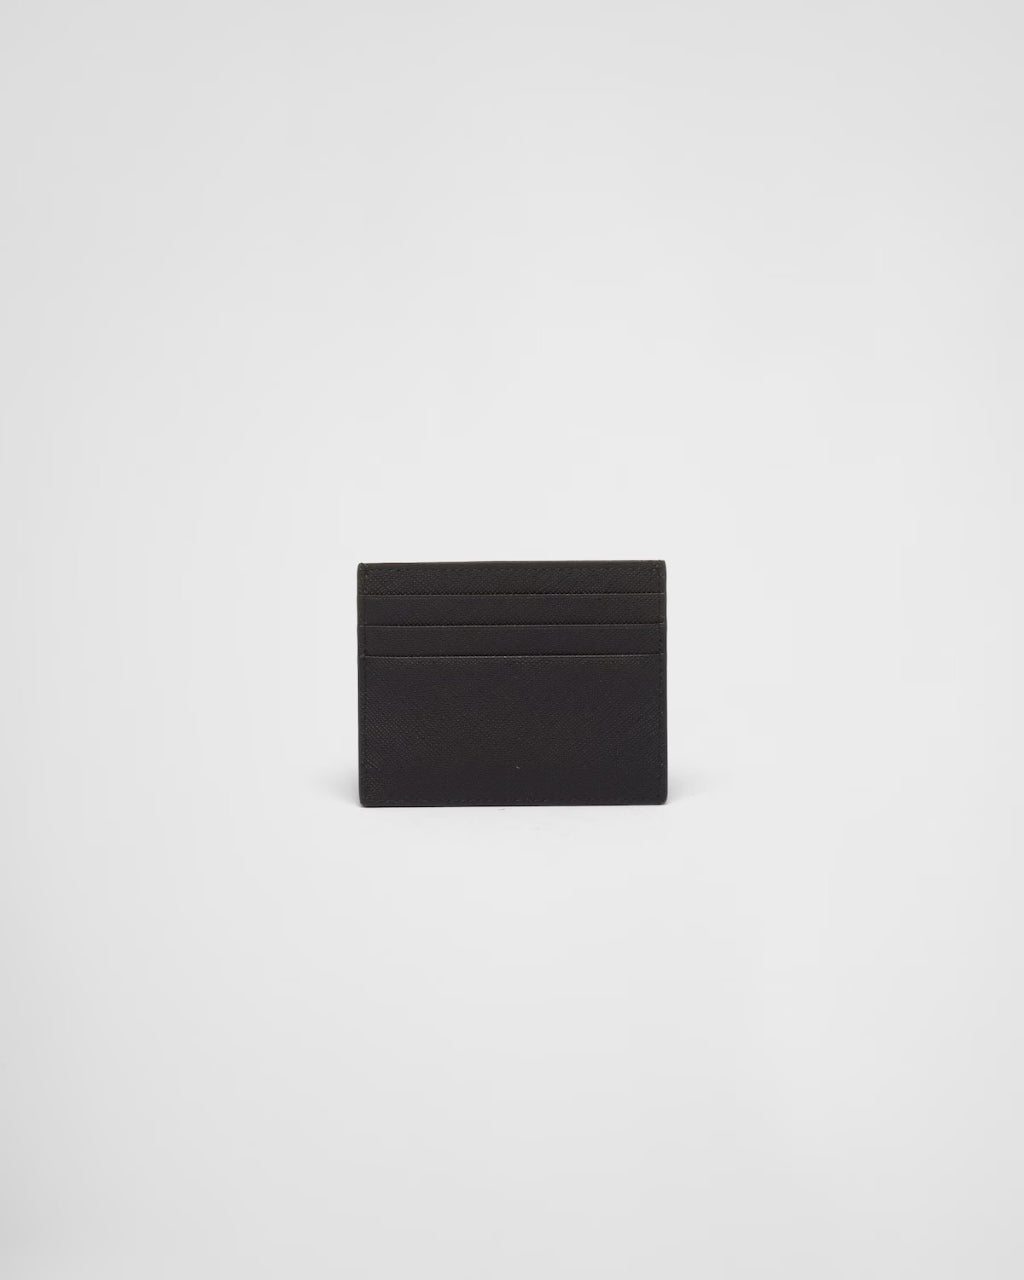 mặt sau PRADA BLACK SAFFIANO LEATHER CARD HOLDER GOLD METAL TRIANGLE LOGO 1MC025_QHH_F0002 authentic blankroom việt nam